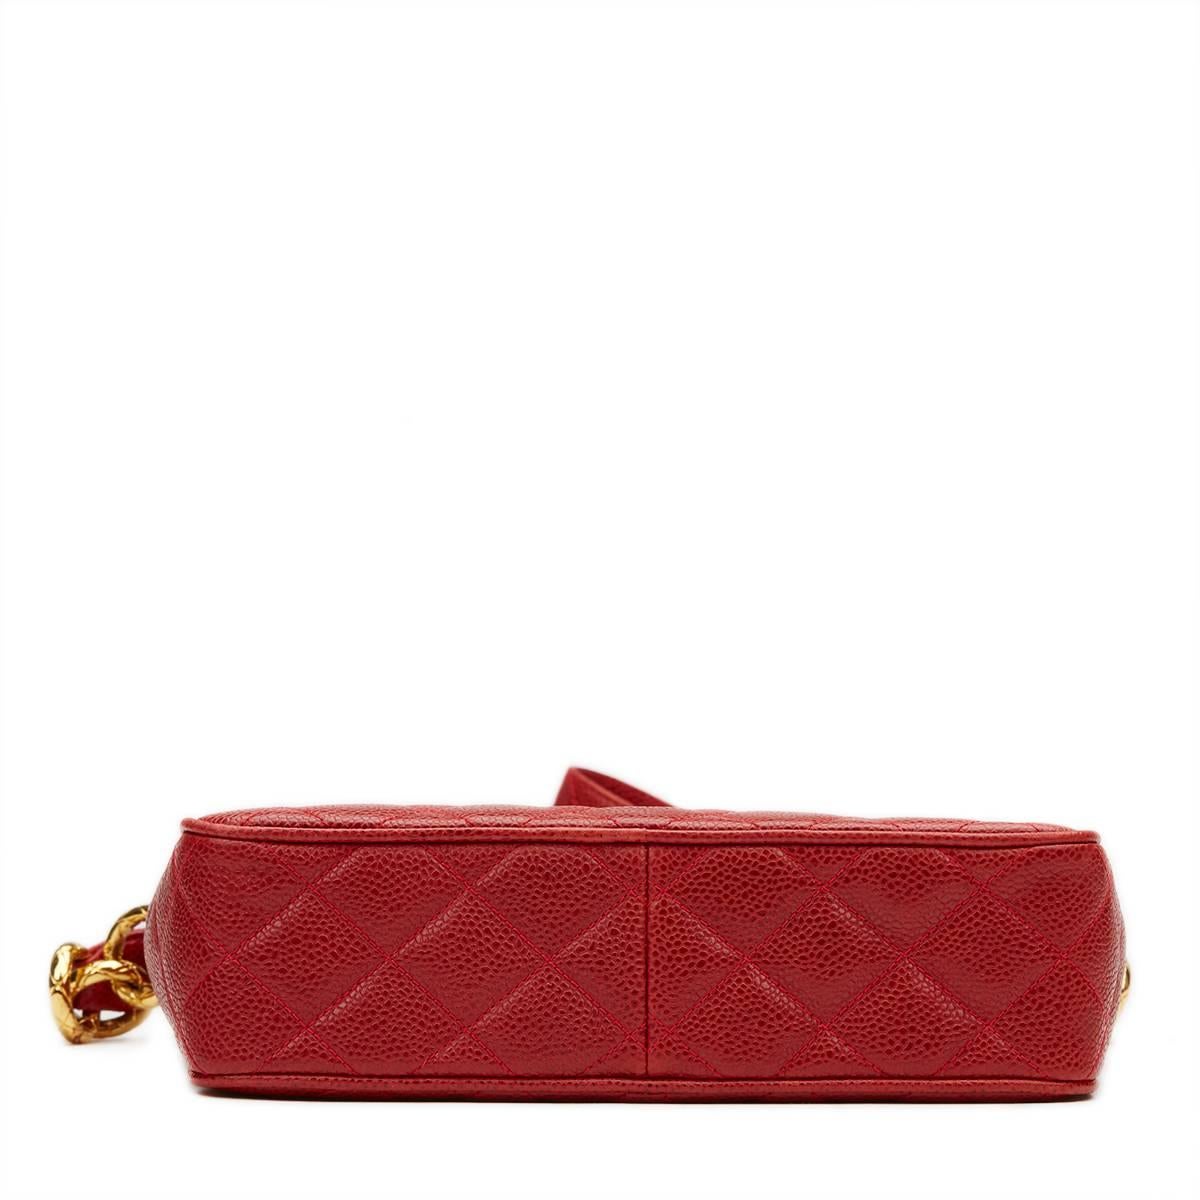 1990s Chanel Red Quilted Caviar Leather Vintage Timeless Shoulder Bag 5